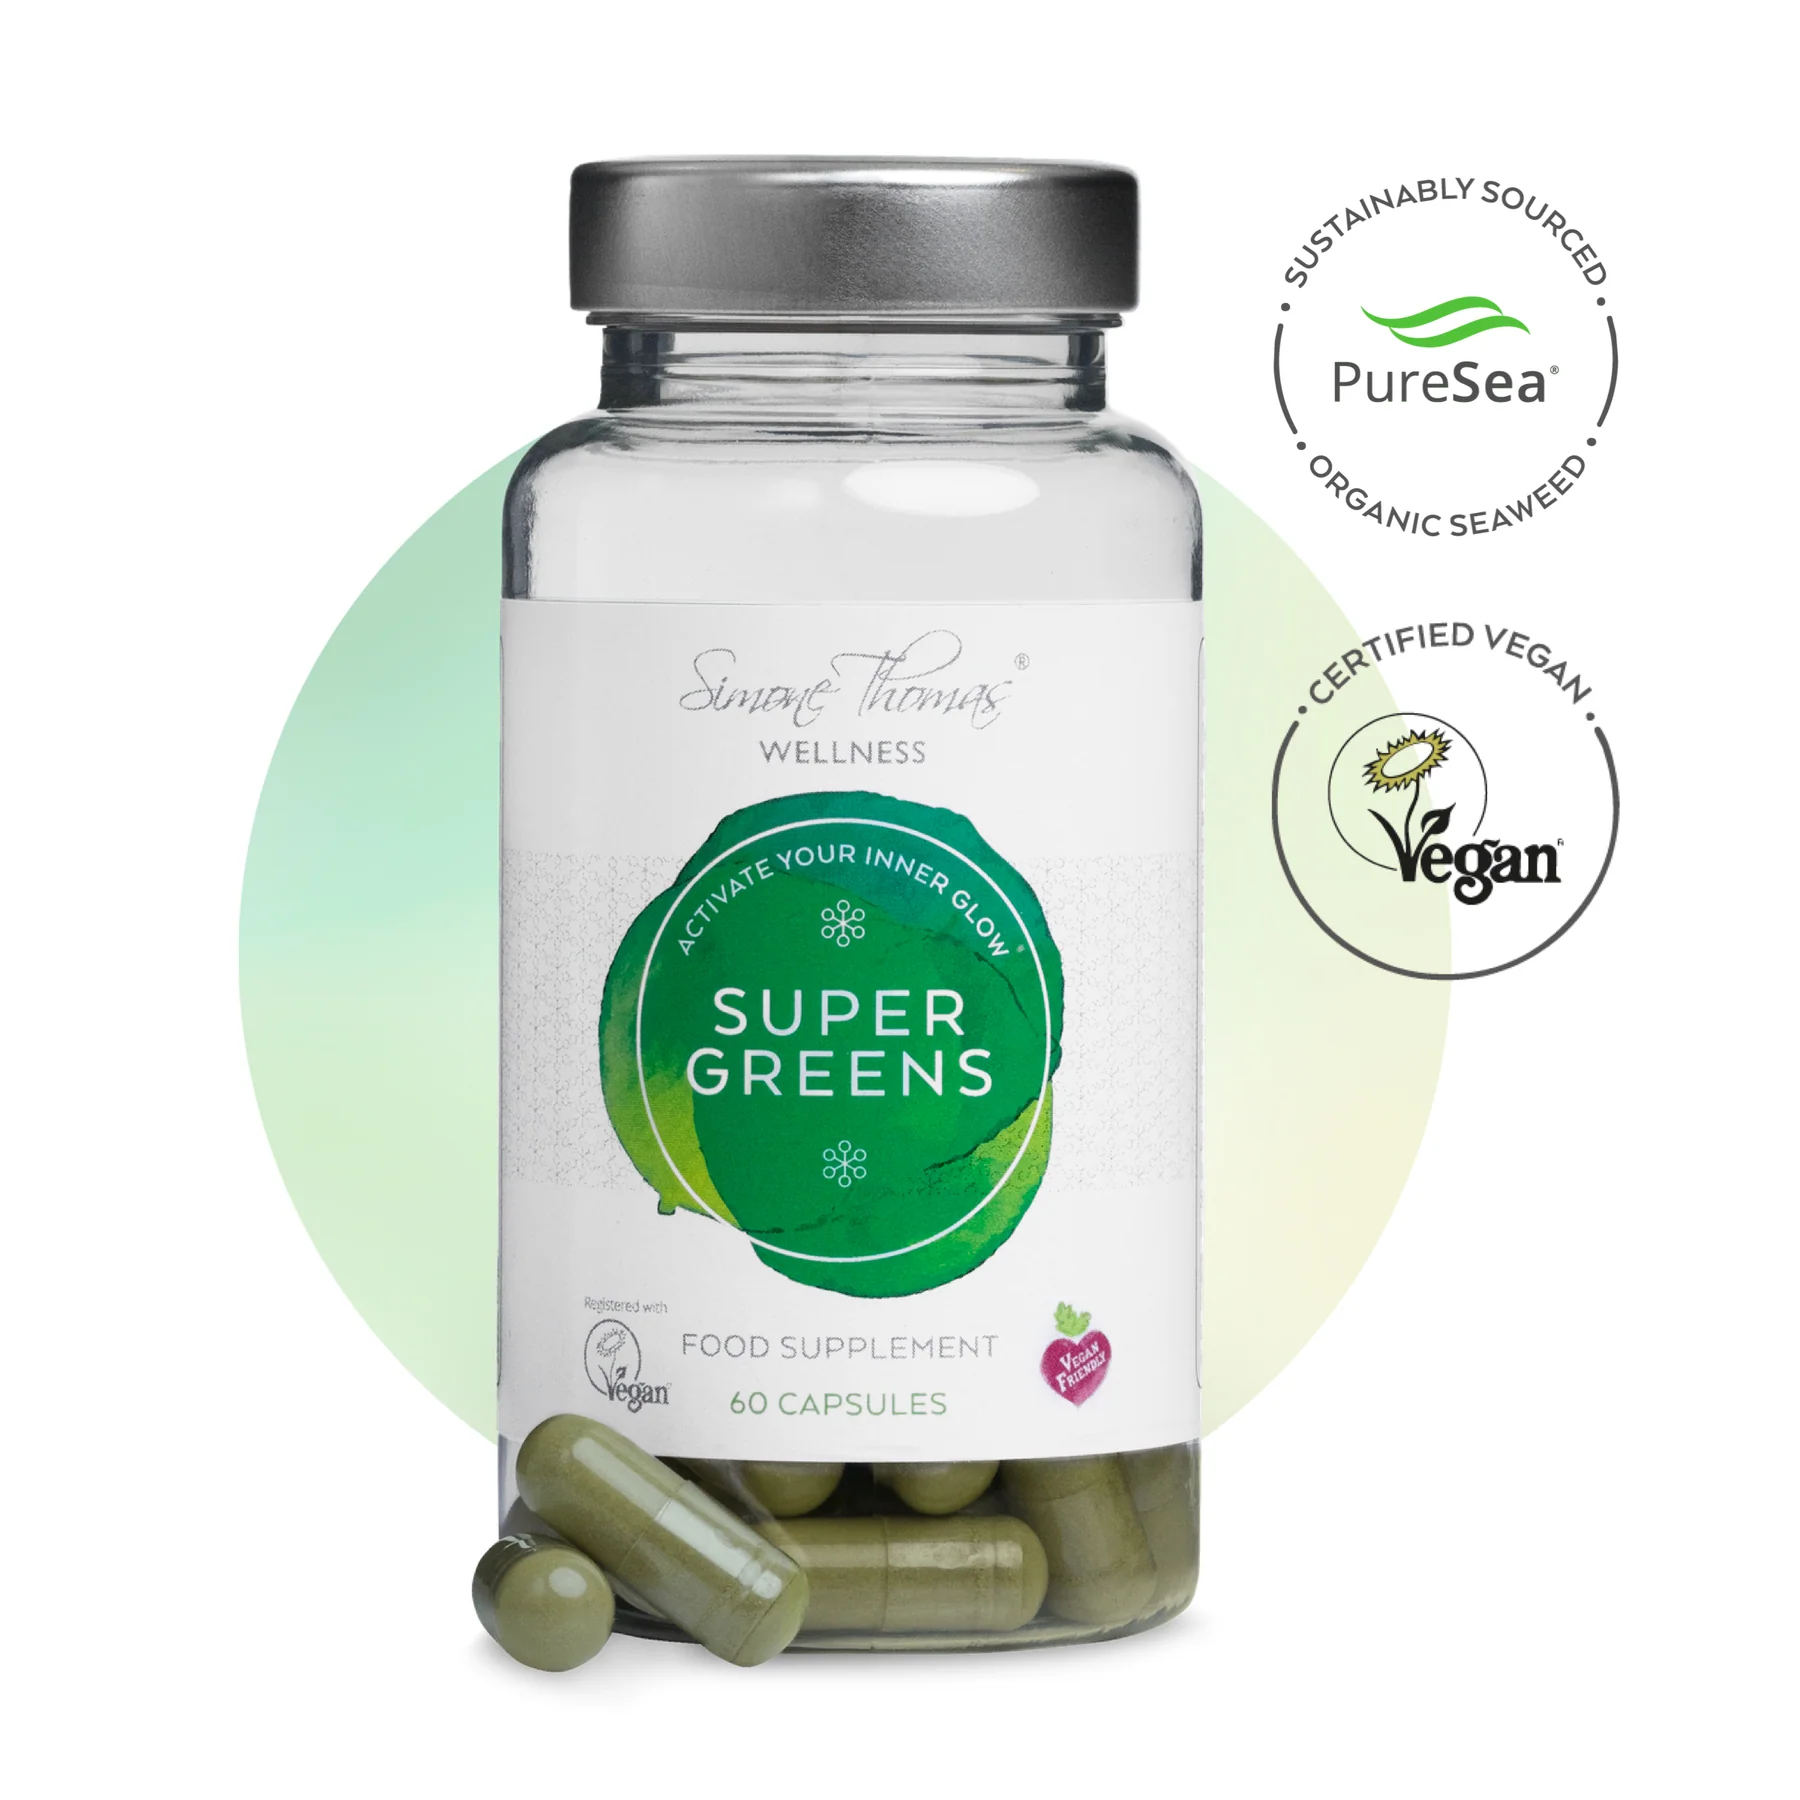 Simone Thomas Wellness Super Greens Supplements